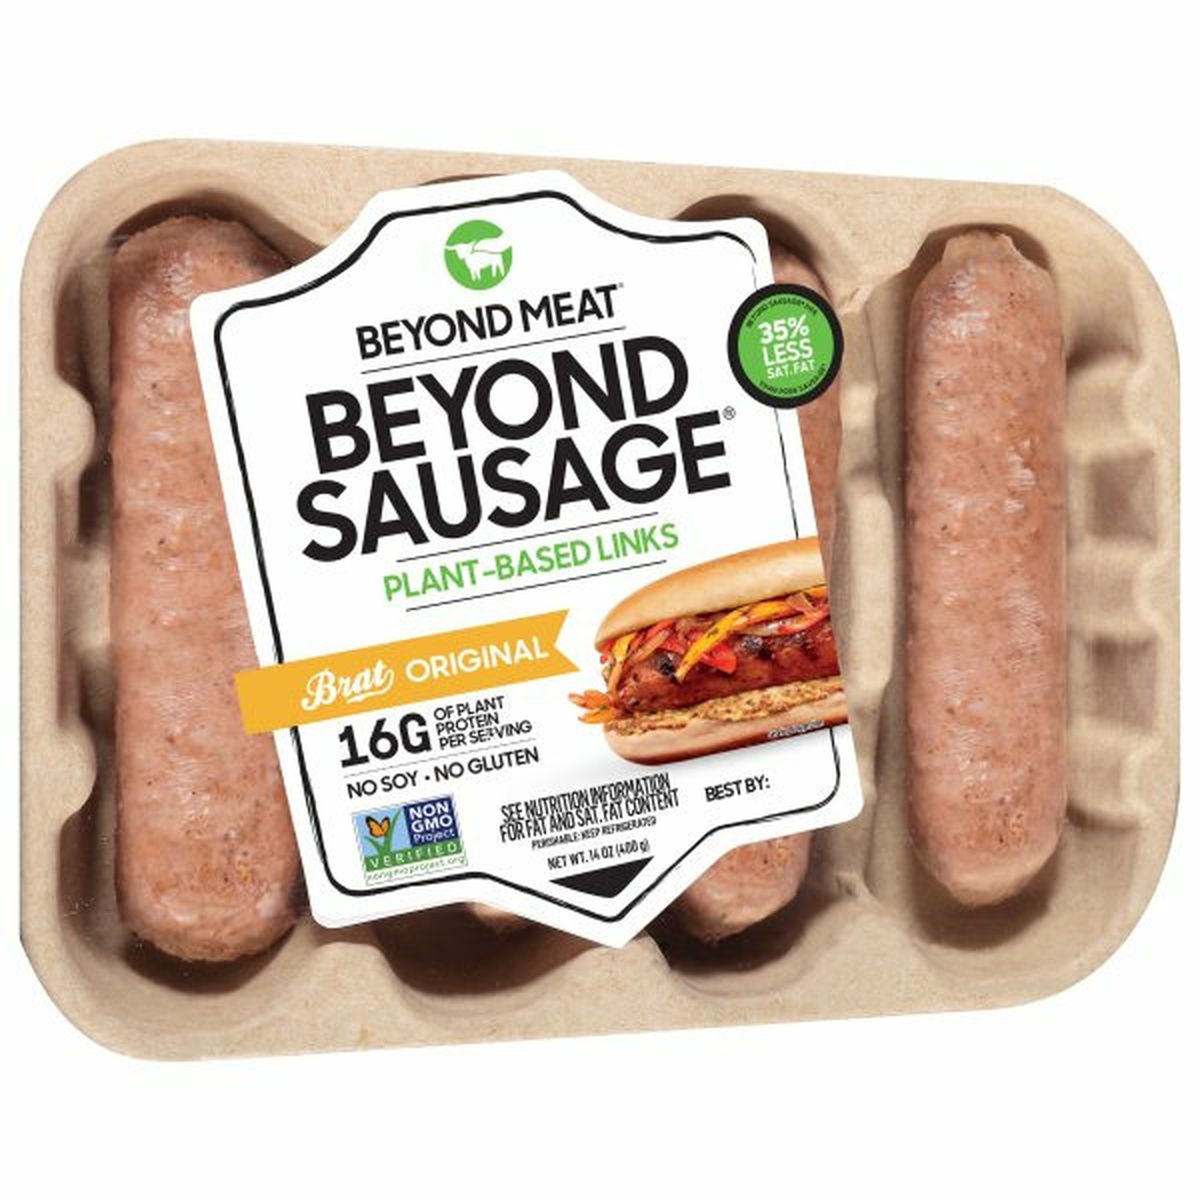 Calories in Beyond Meat Beyond Sausage Links, Plant-Based, Brat Original